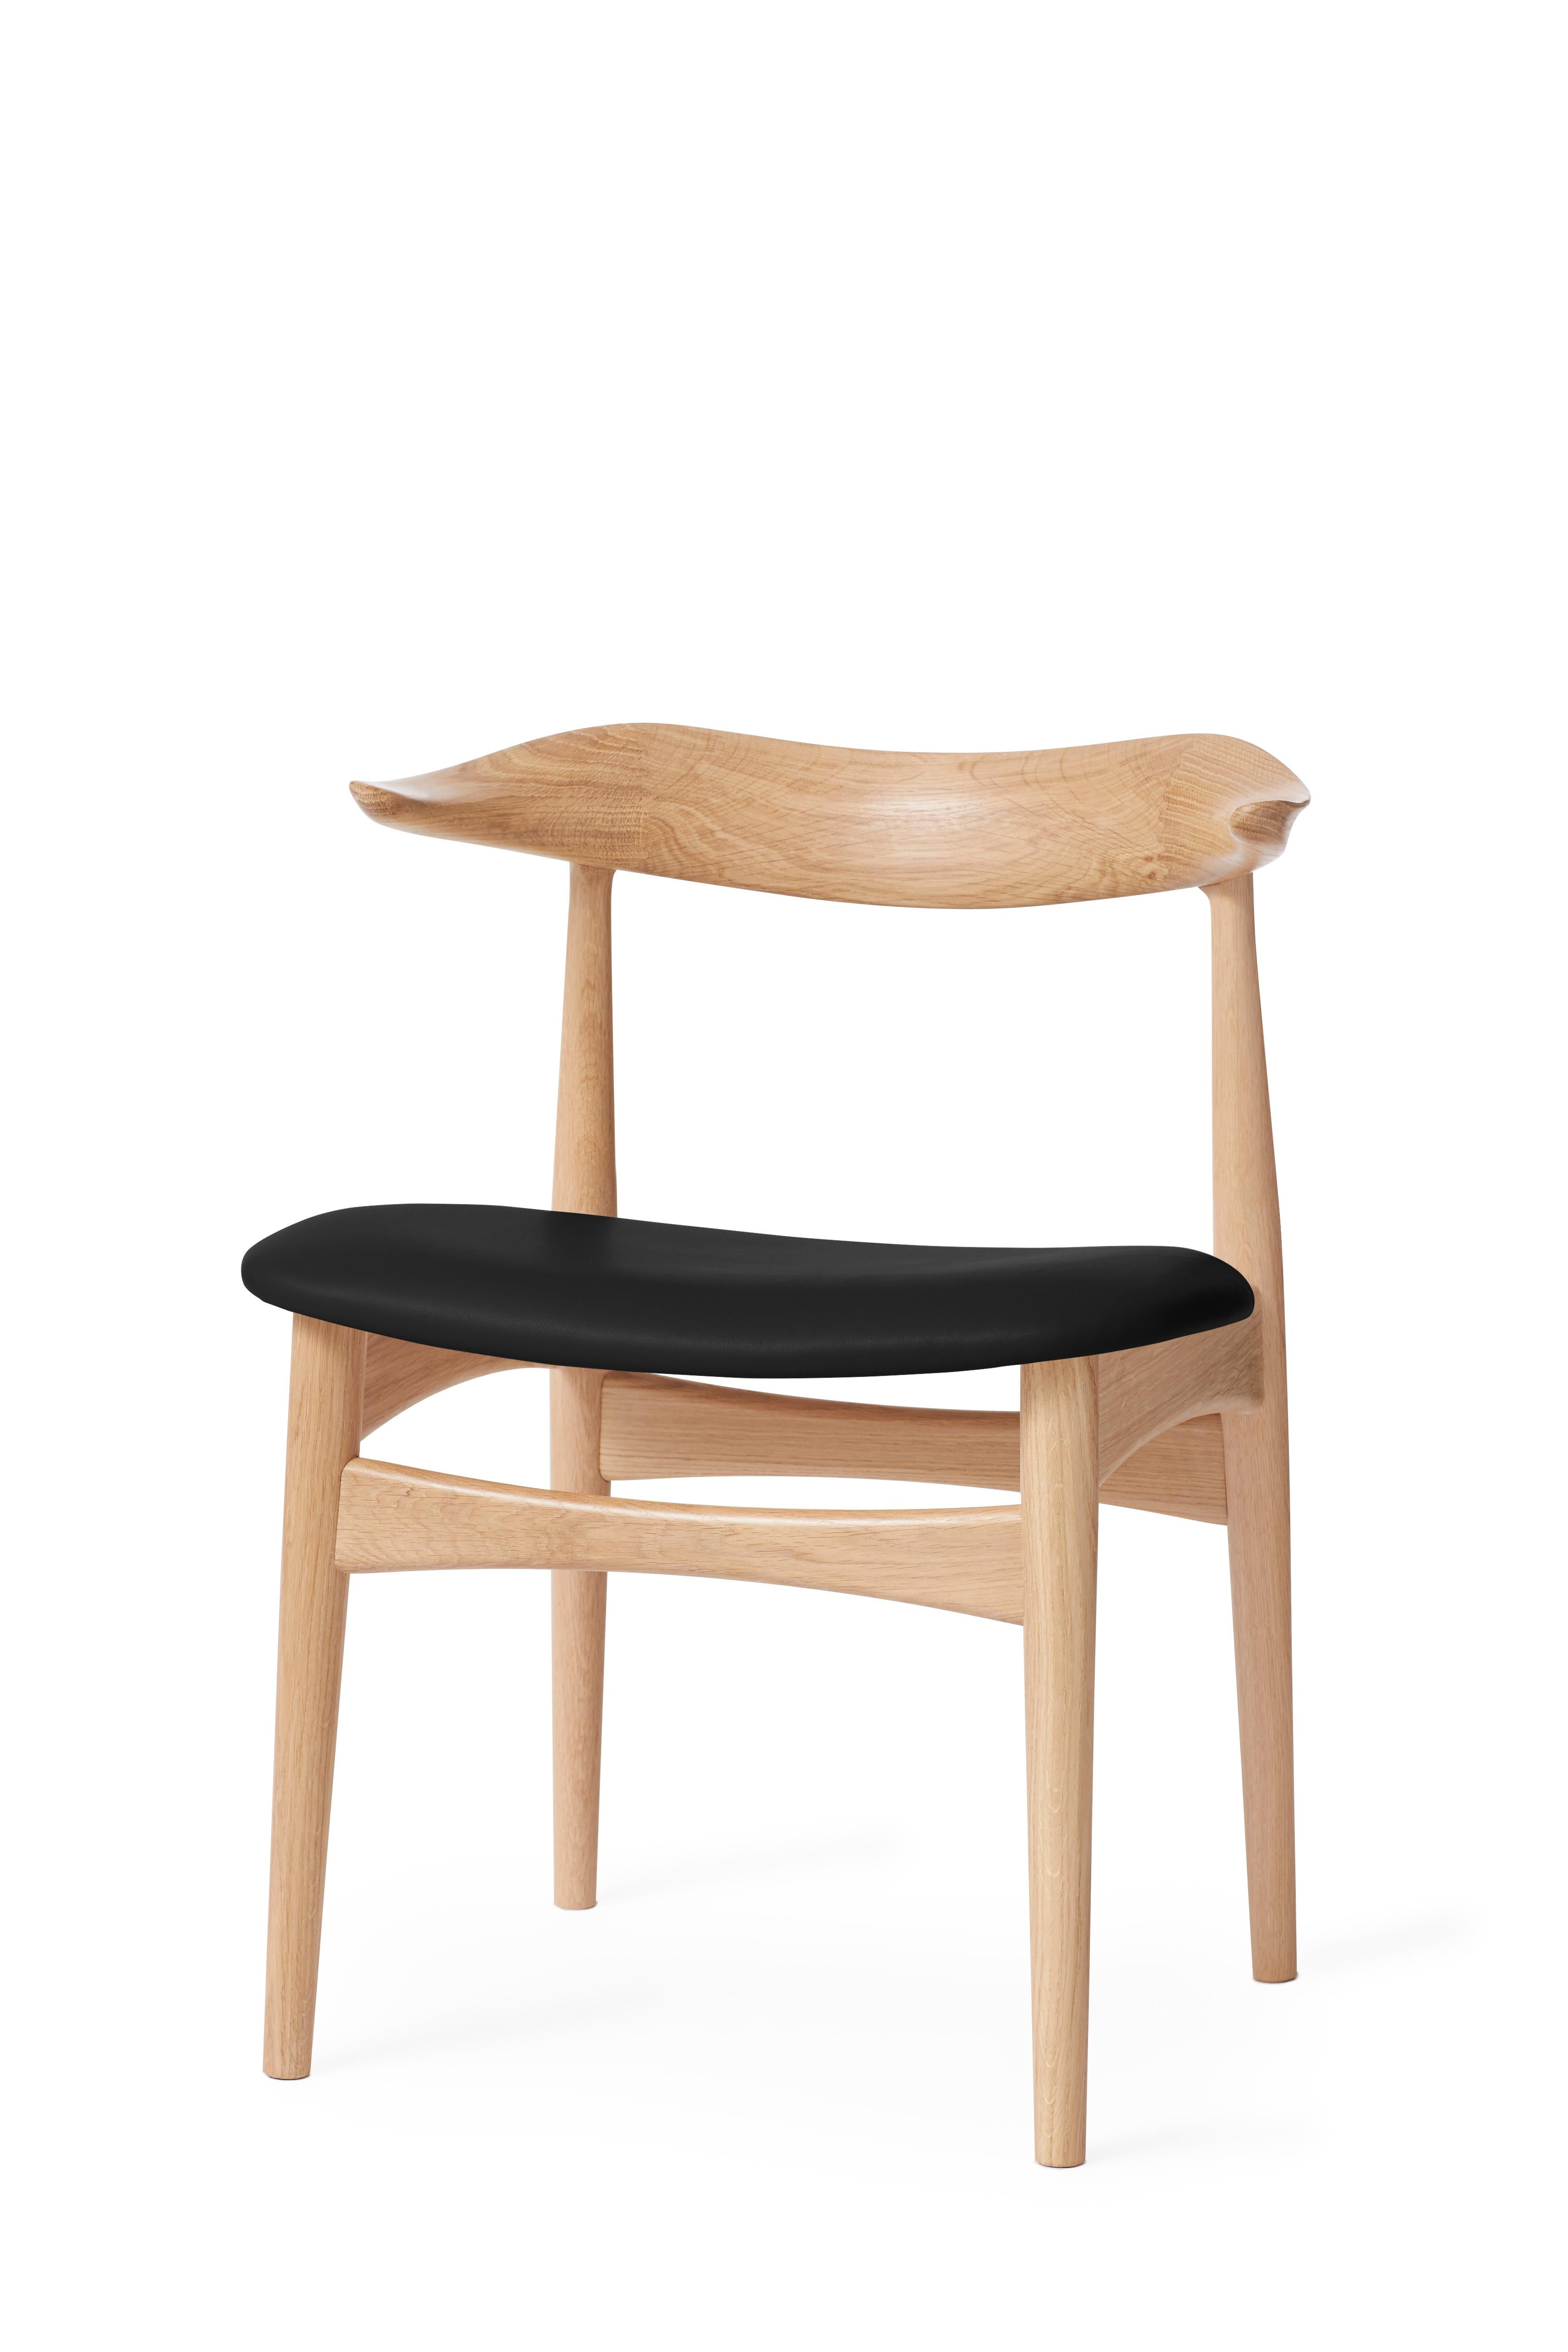 For Sale: Black (Prescott 207) Cow Horn Oak Chair, by Knud Færch from Warm Nordic 2